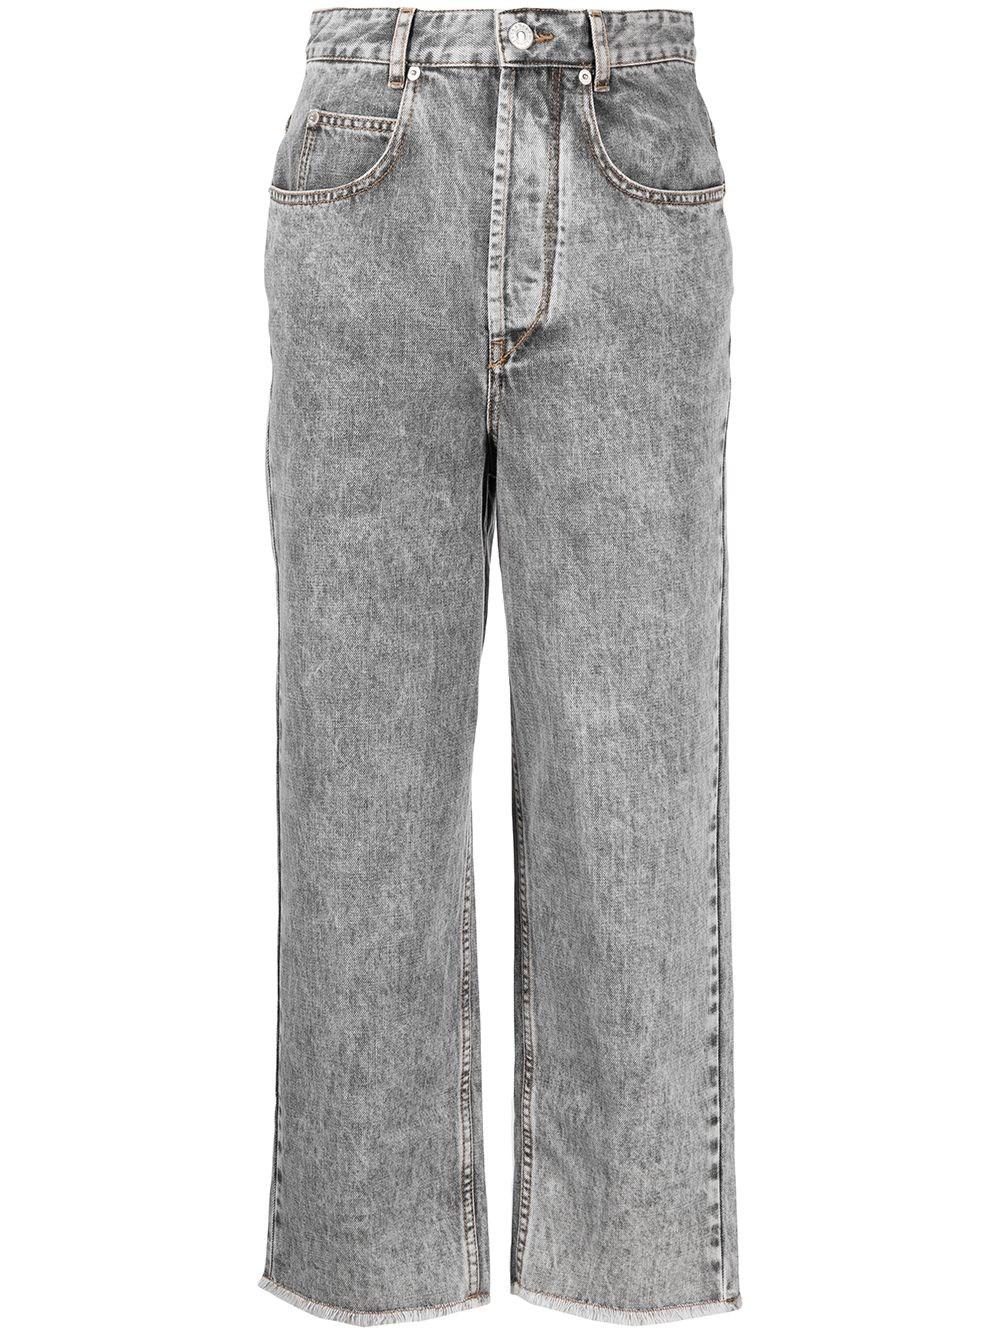 Étoile Isabel Marant Denim High Waist Jeans in Gray - Lyst